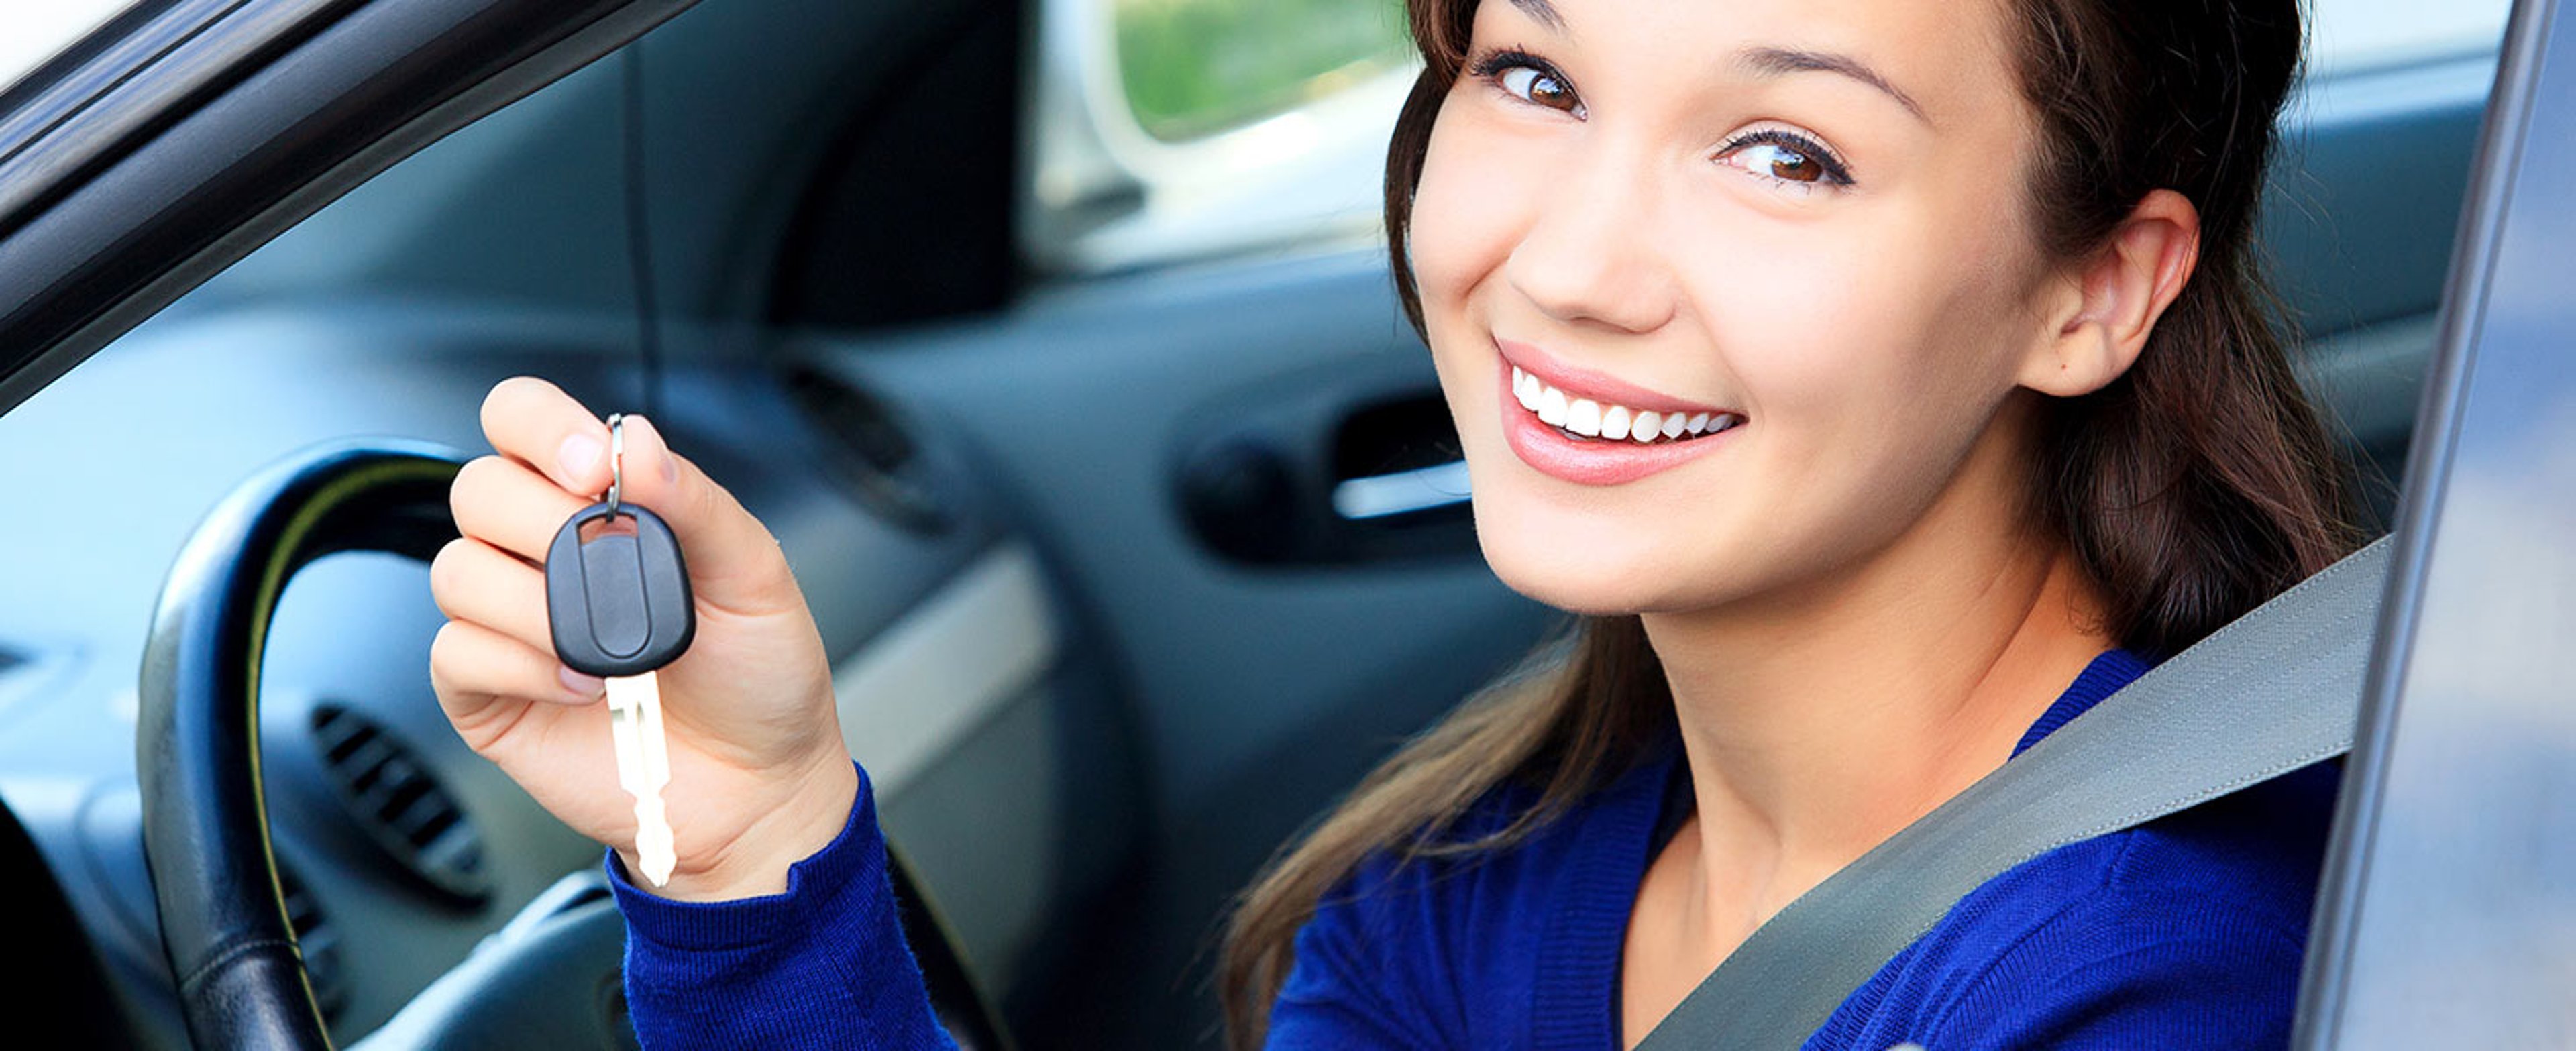 Teen driver  holding her car keys